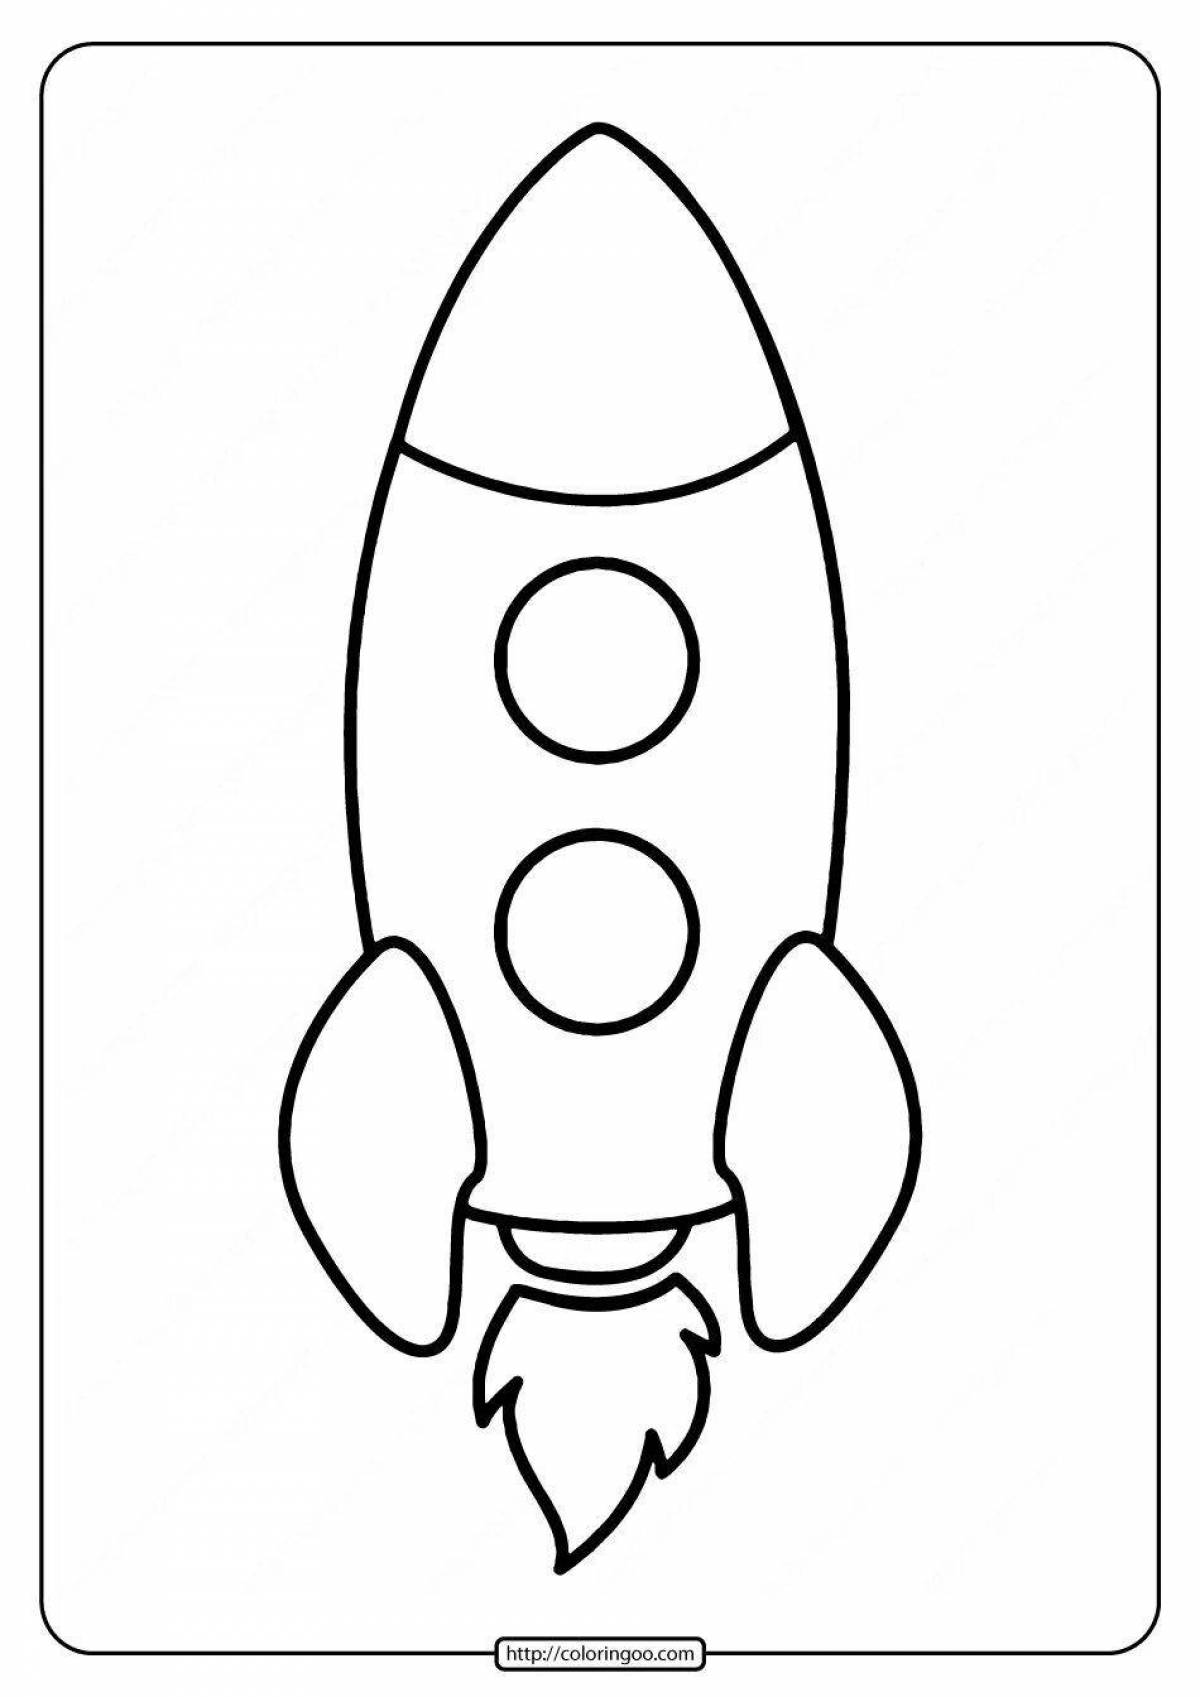 Fun coloring rocket for kids